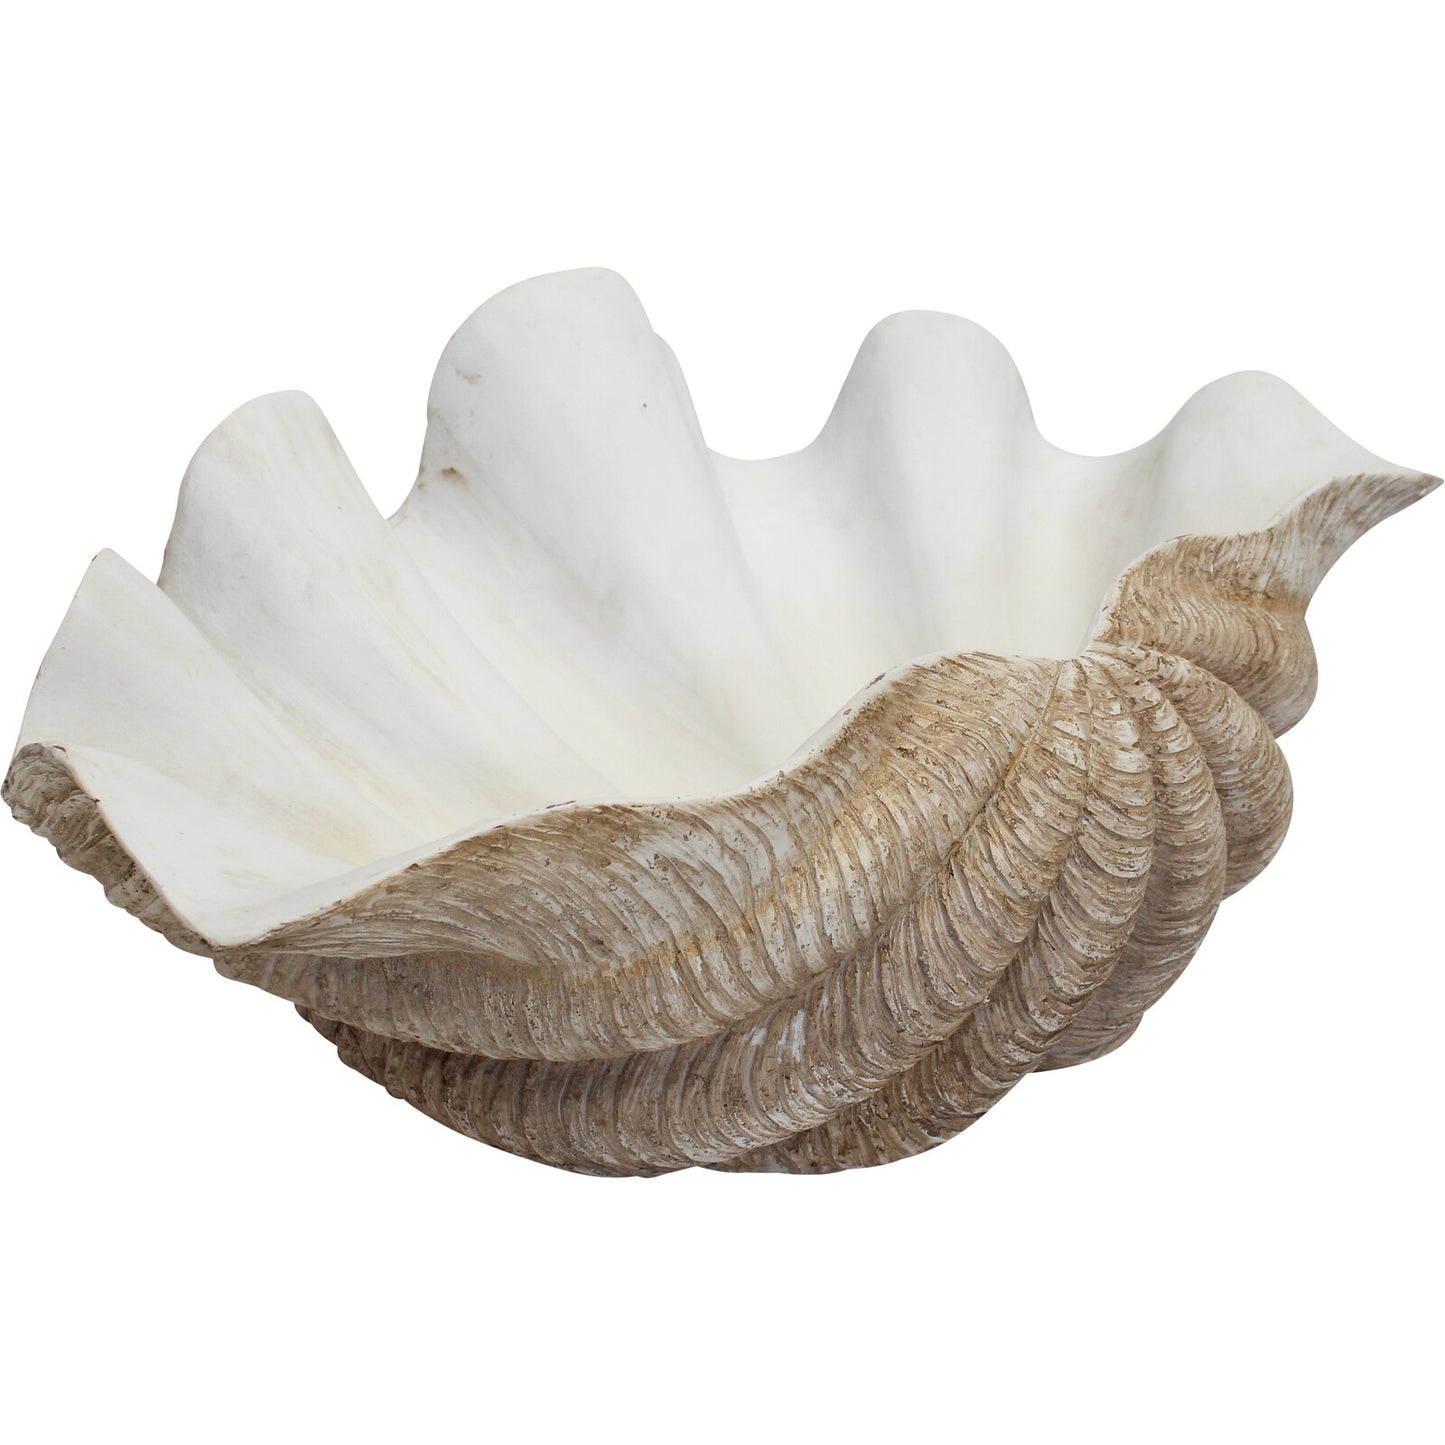 giant clam 3